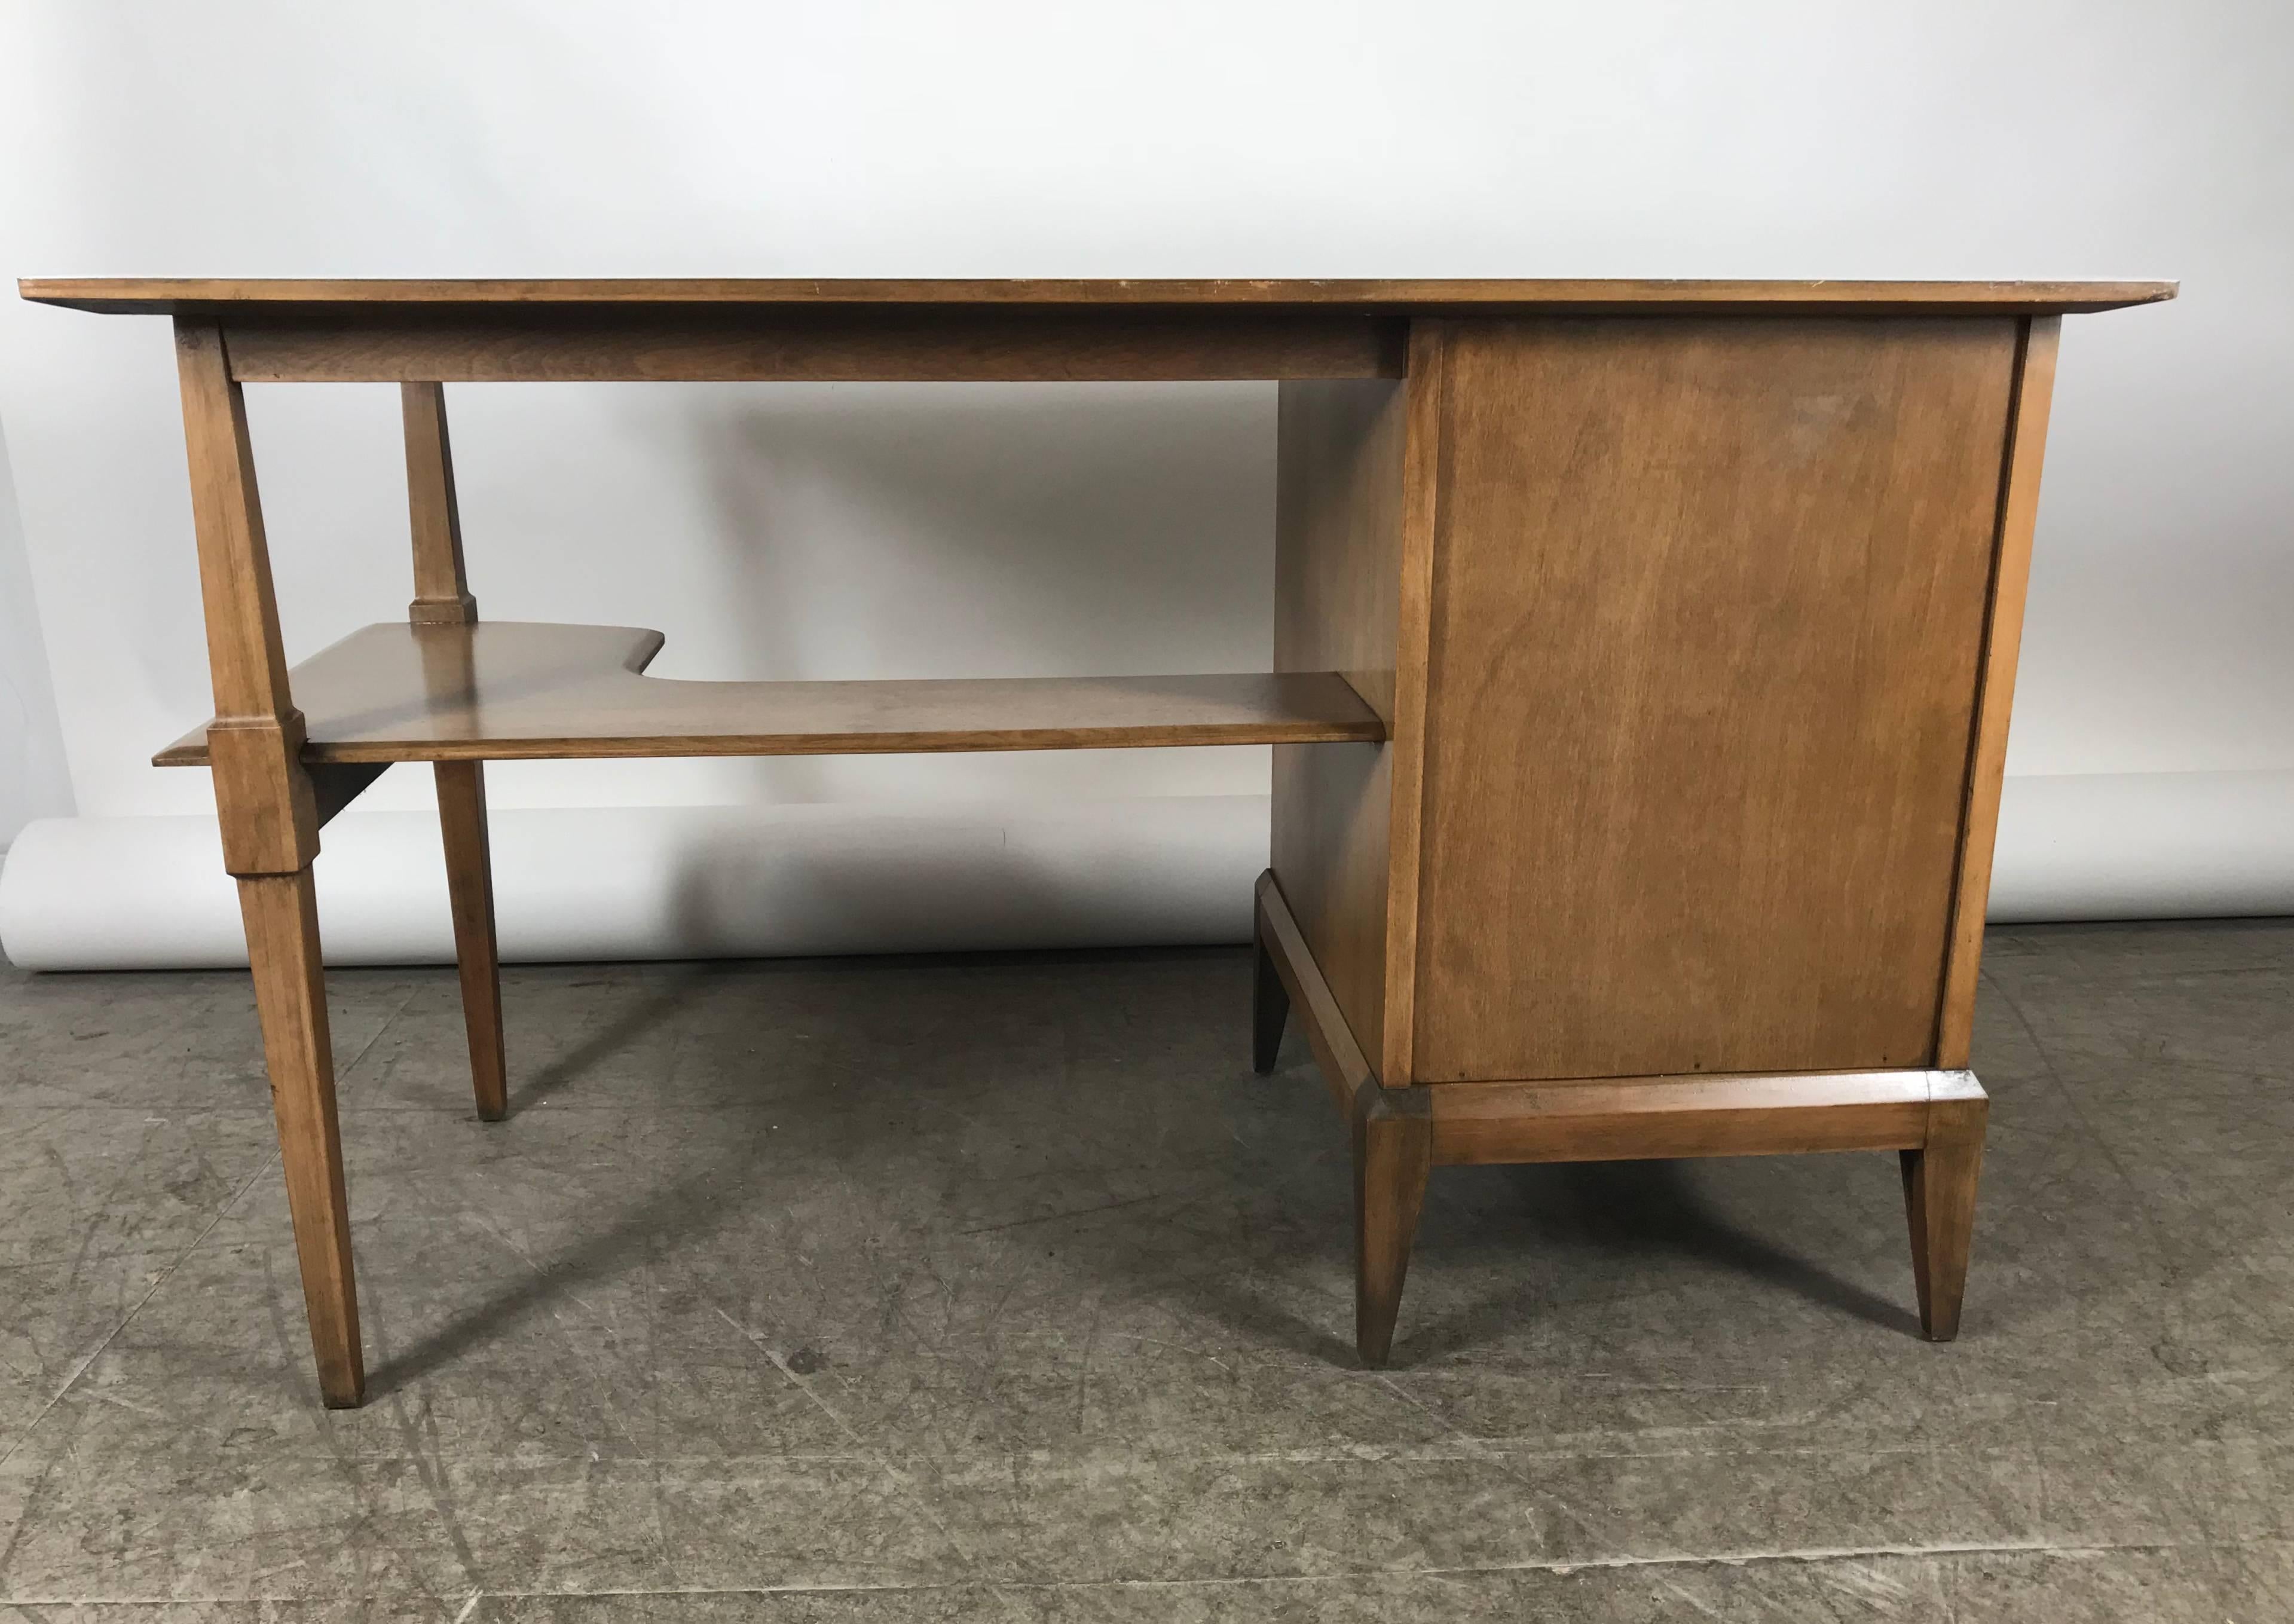 American Stylized Mid-Century Modern Desk by Heywood Wakefield